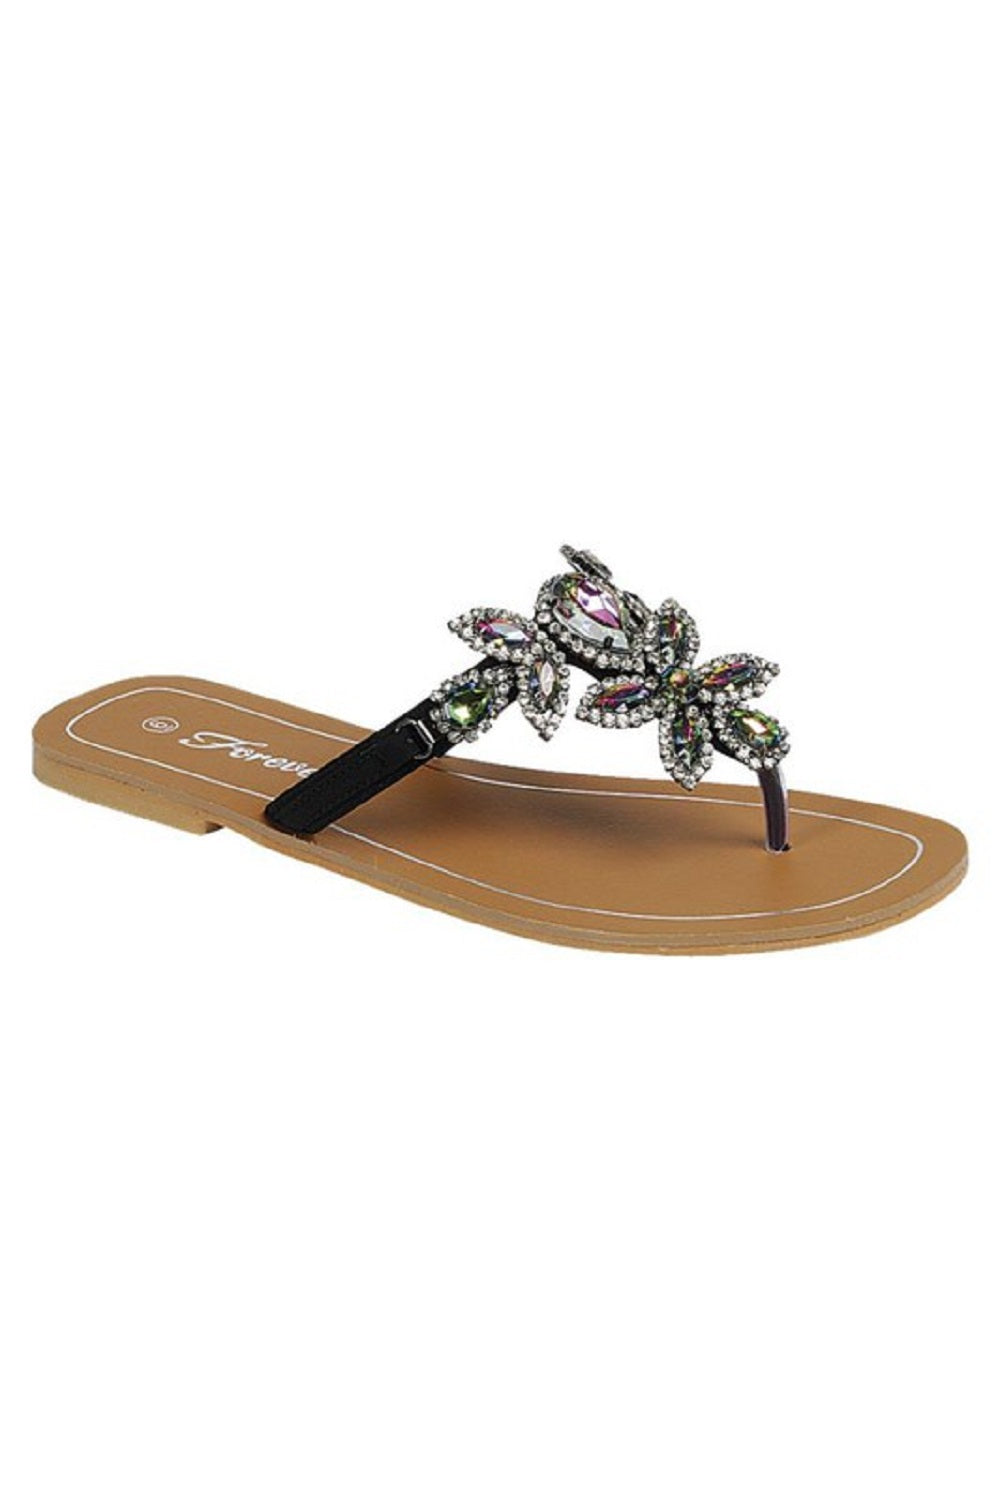 Rhinestone Flip Flop Jeweled Sandals - Black Multi - Scarvesnthangs